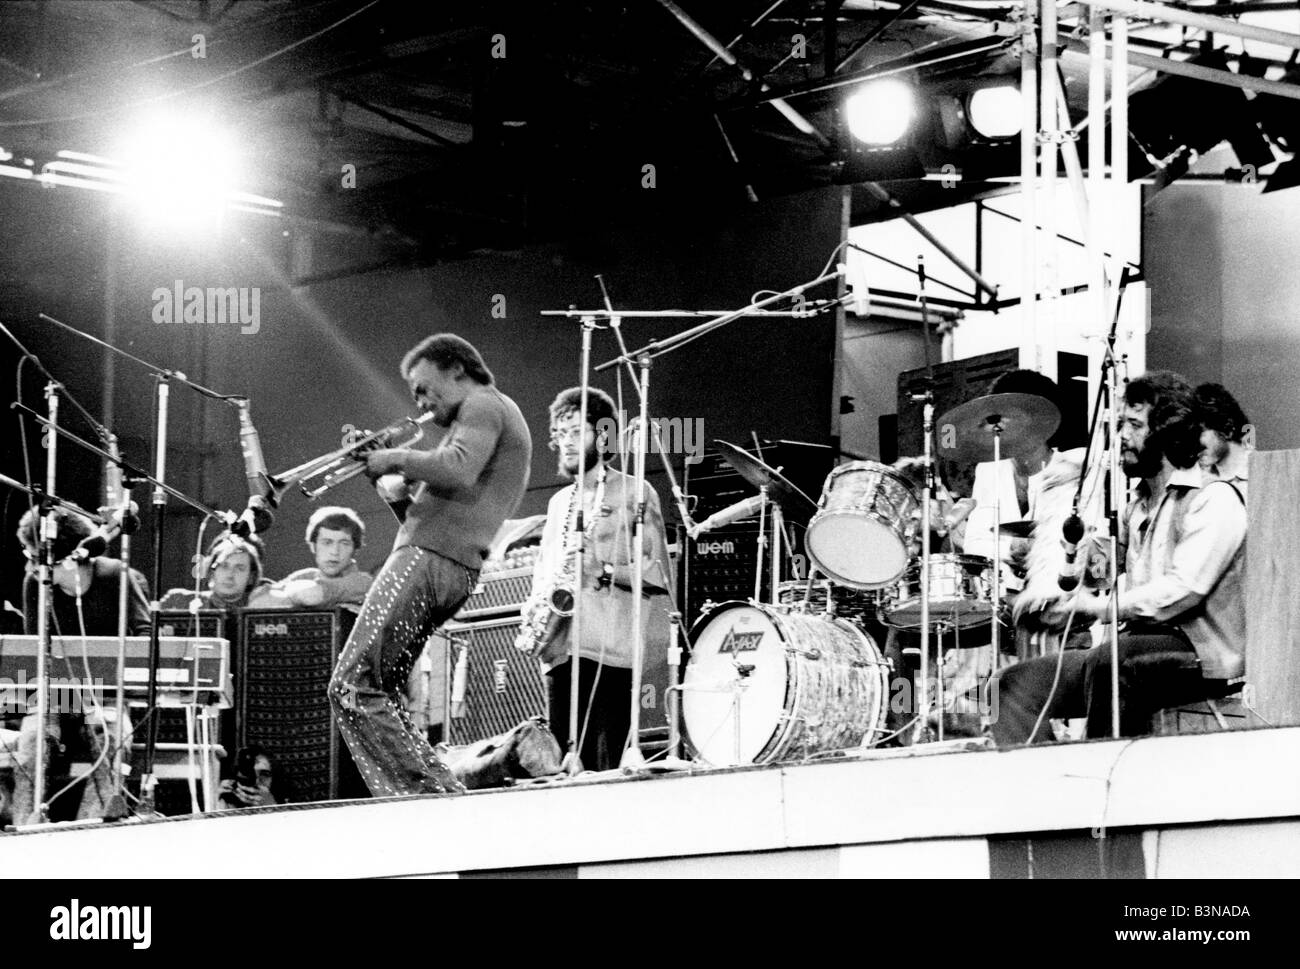 MILES DAVIS  US jazz musician at the 1970 Isle of Wight Festival in England. Photo Laurens van Houten Stock Photo